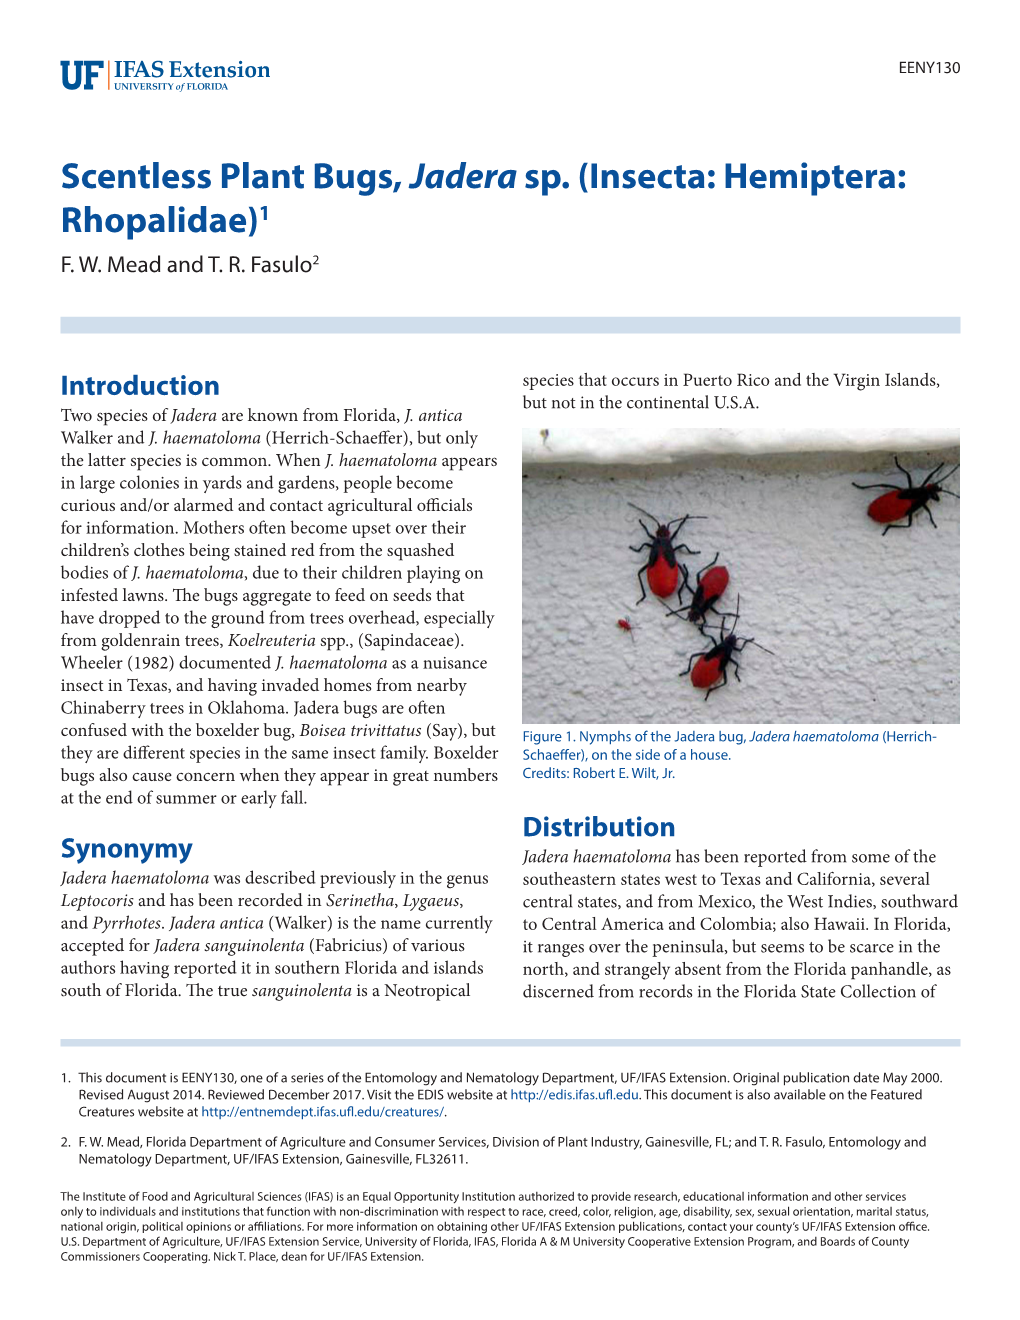 Scentless Plant Bugs, Jadera Sp